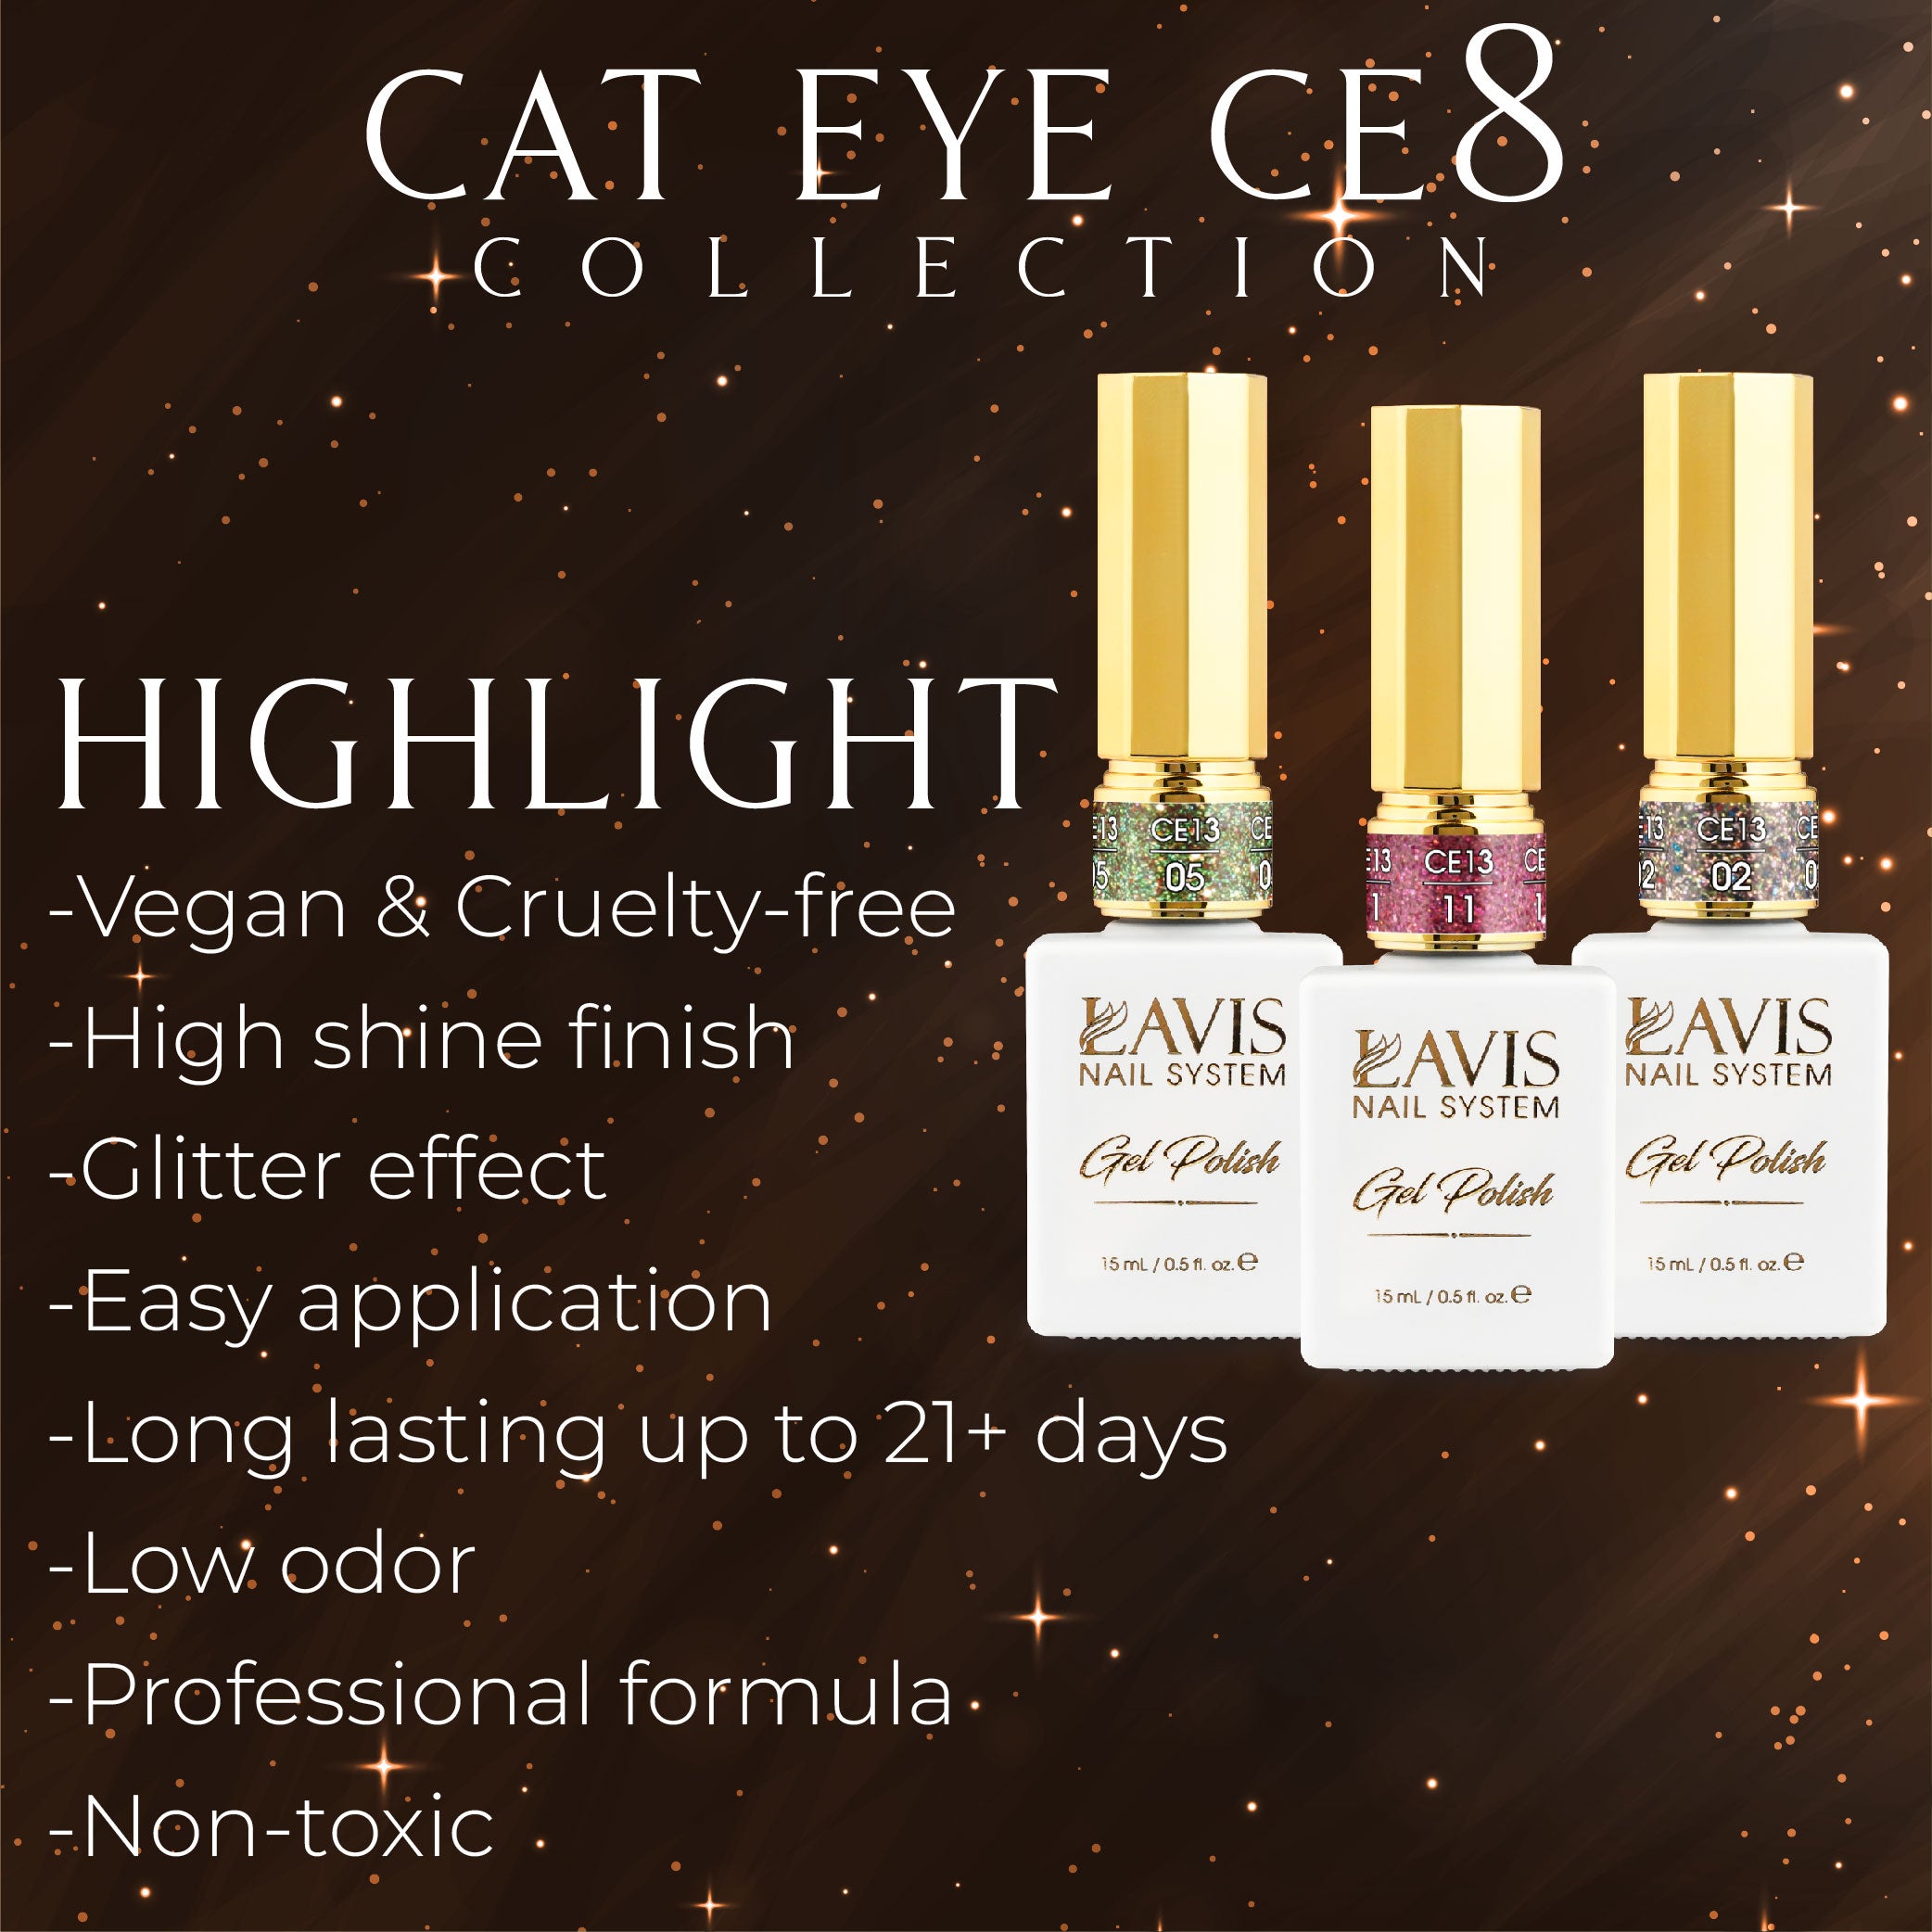 LAVIS Cat Eyes CE8 - Set 12 - Gel Polish 0.5 oz - Lavis Hidden Treasures Collection